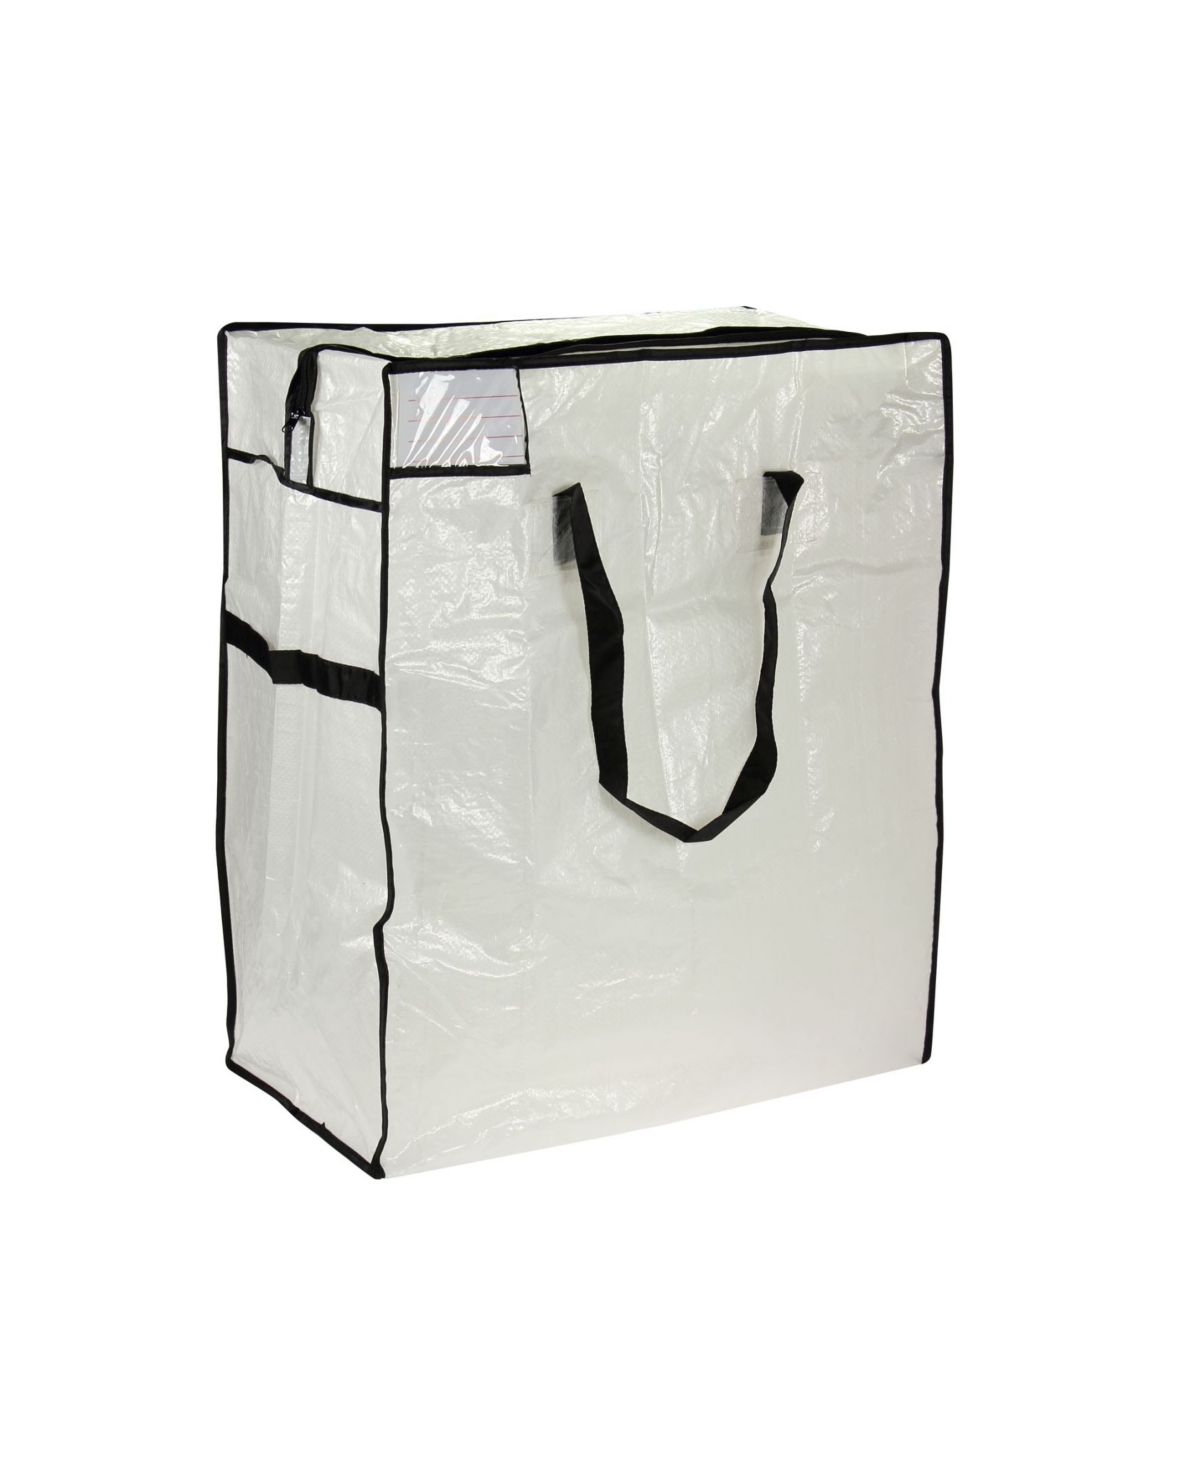 Medium Storage Tote Bag - White and Black